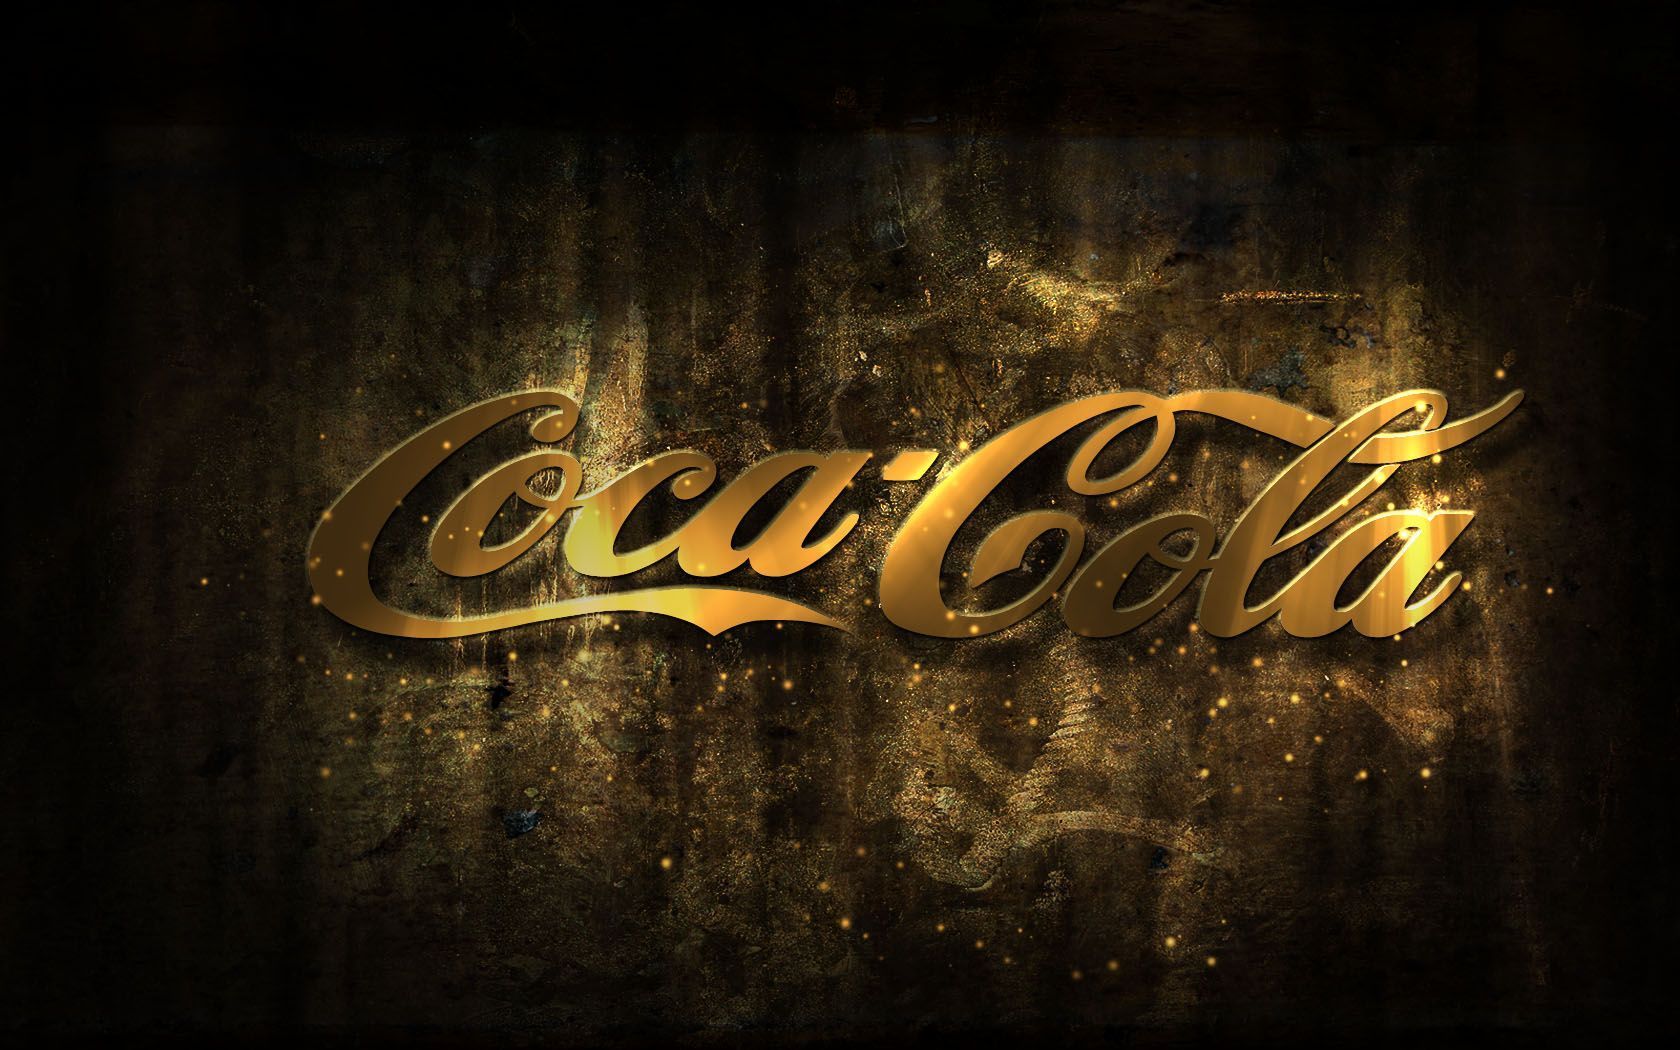 Coca Cola Logos Wallpaper | Full HD Pictures